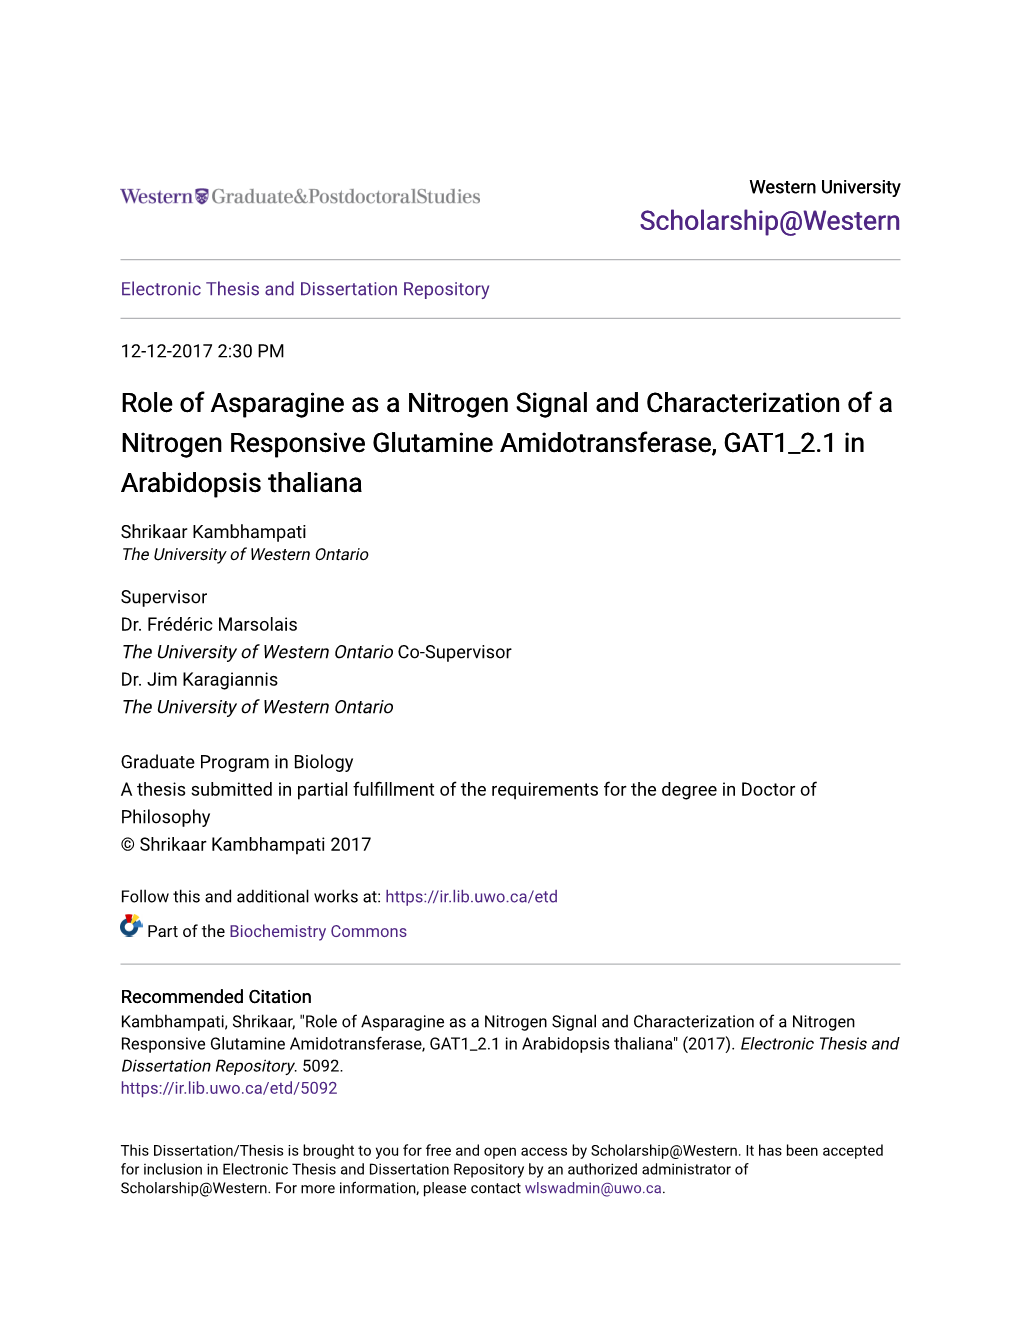 Role of Asparagine As a Nitrogen Signal and Characterization of a Nitrogen Responsive Glutamine Amidotransferase, GAT1 2.1 in Arabidopsis Thaliana